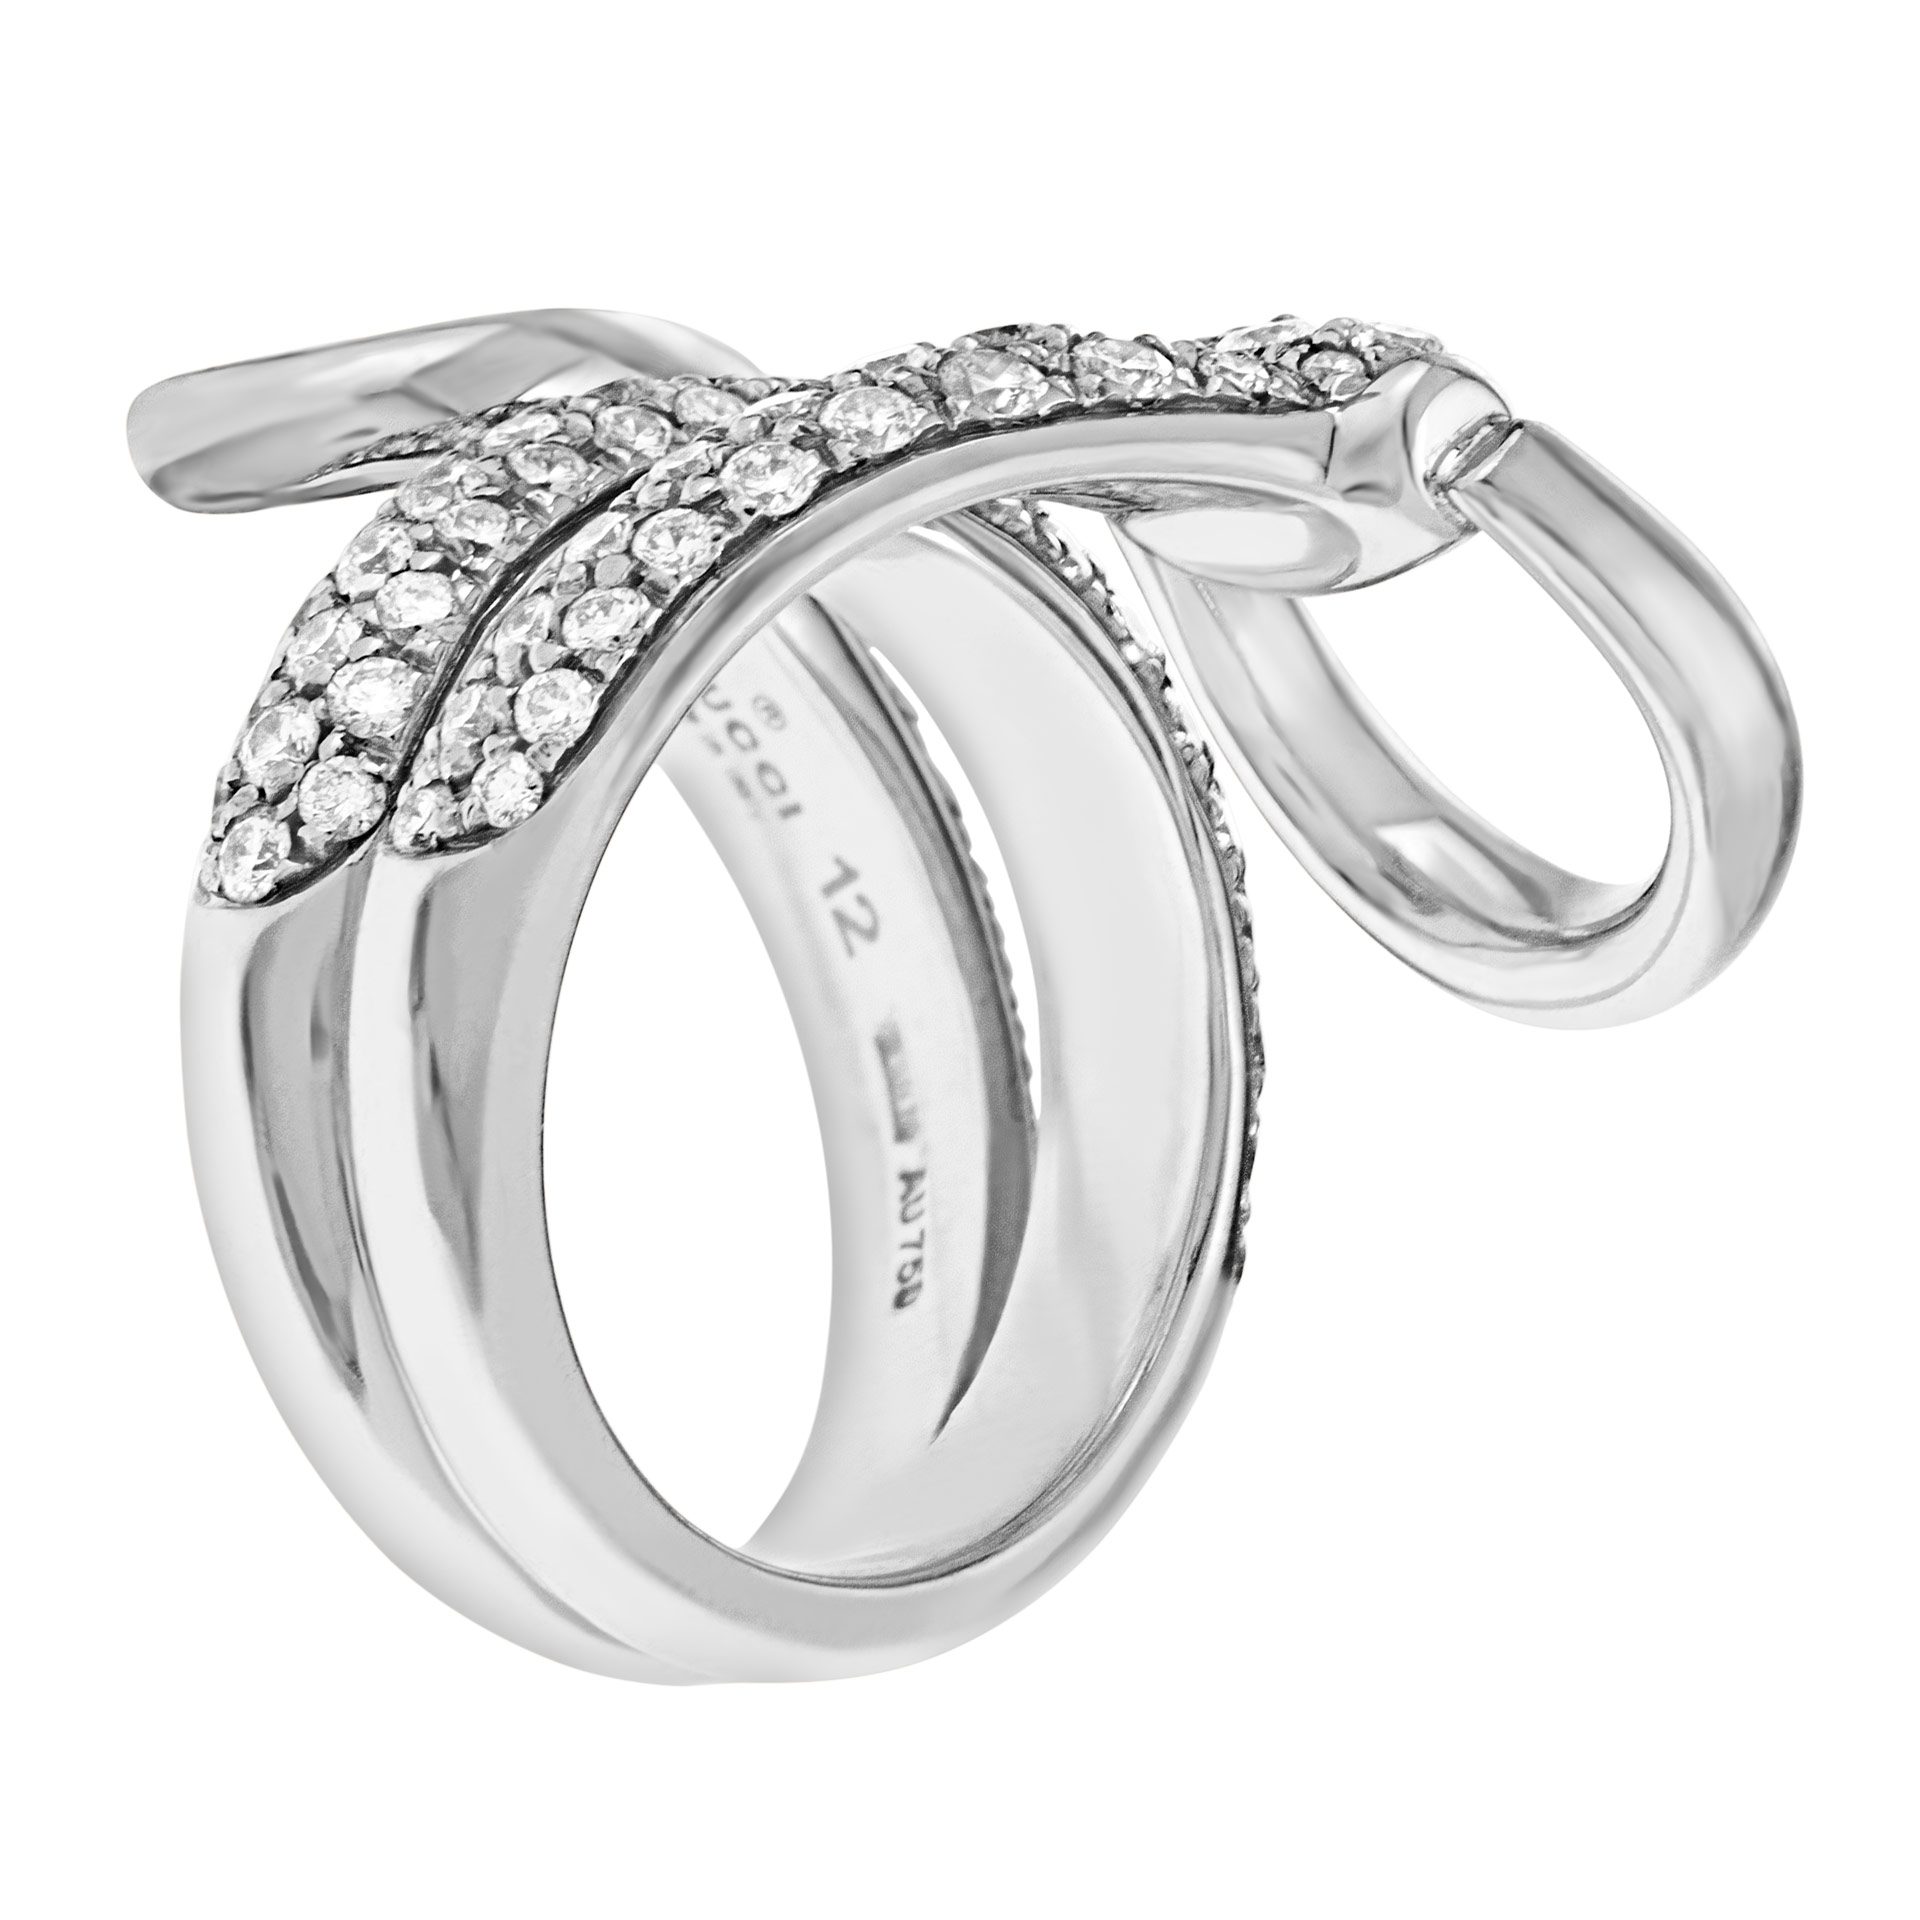 Gucci Horsebit diamond ring in 18k white gold. 1.98 carats. Size 6 image 3